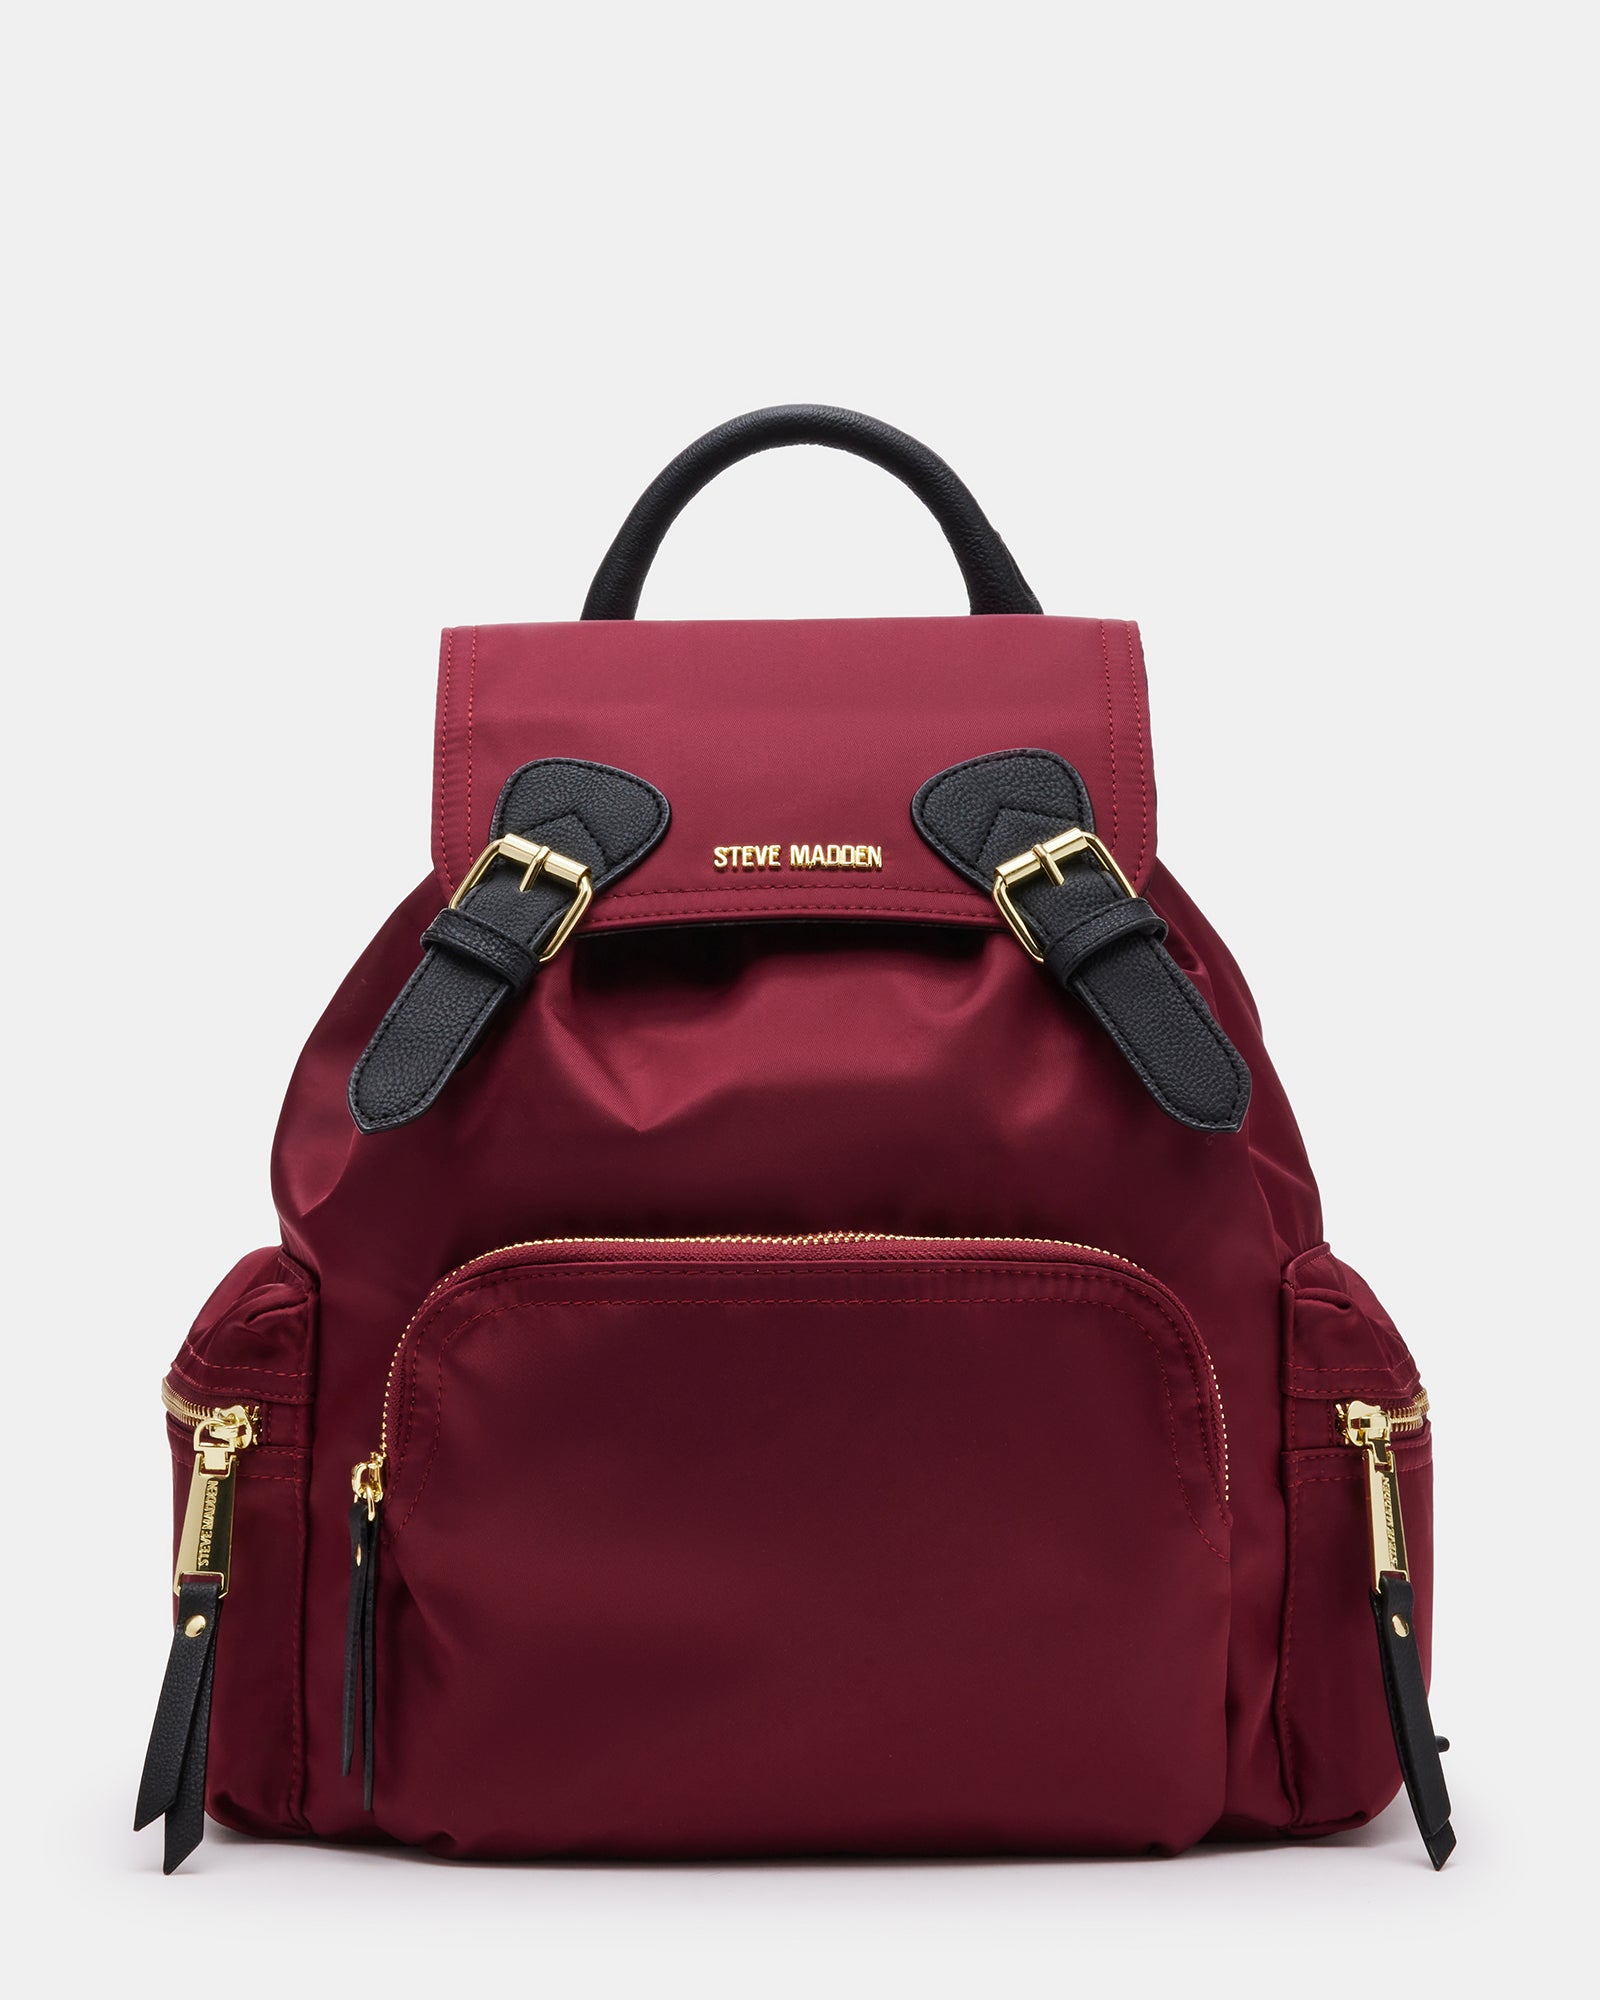 Steve Madden Red Handbags | ShopStyle